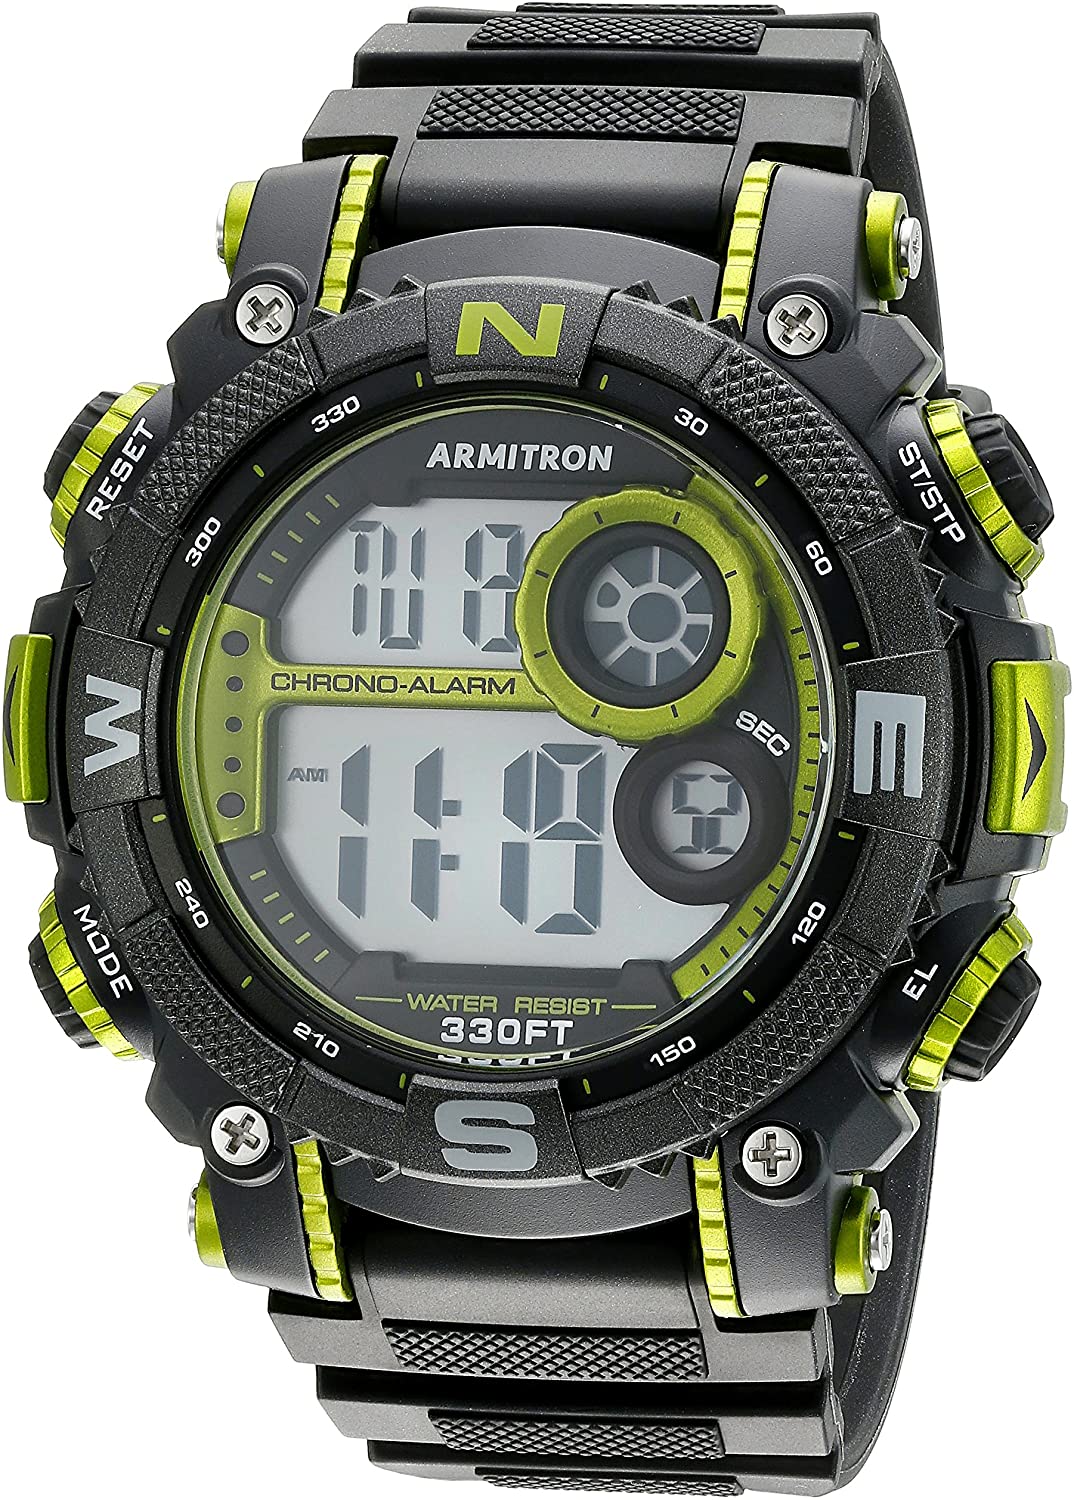 Armitron Digital Watch Manual